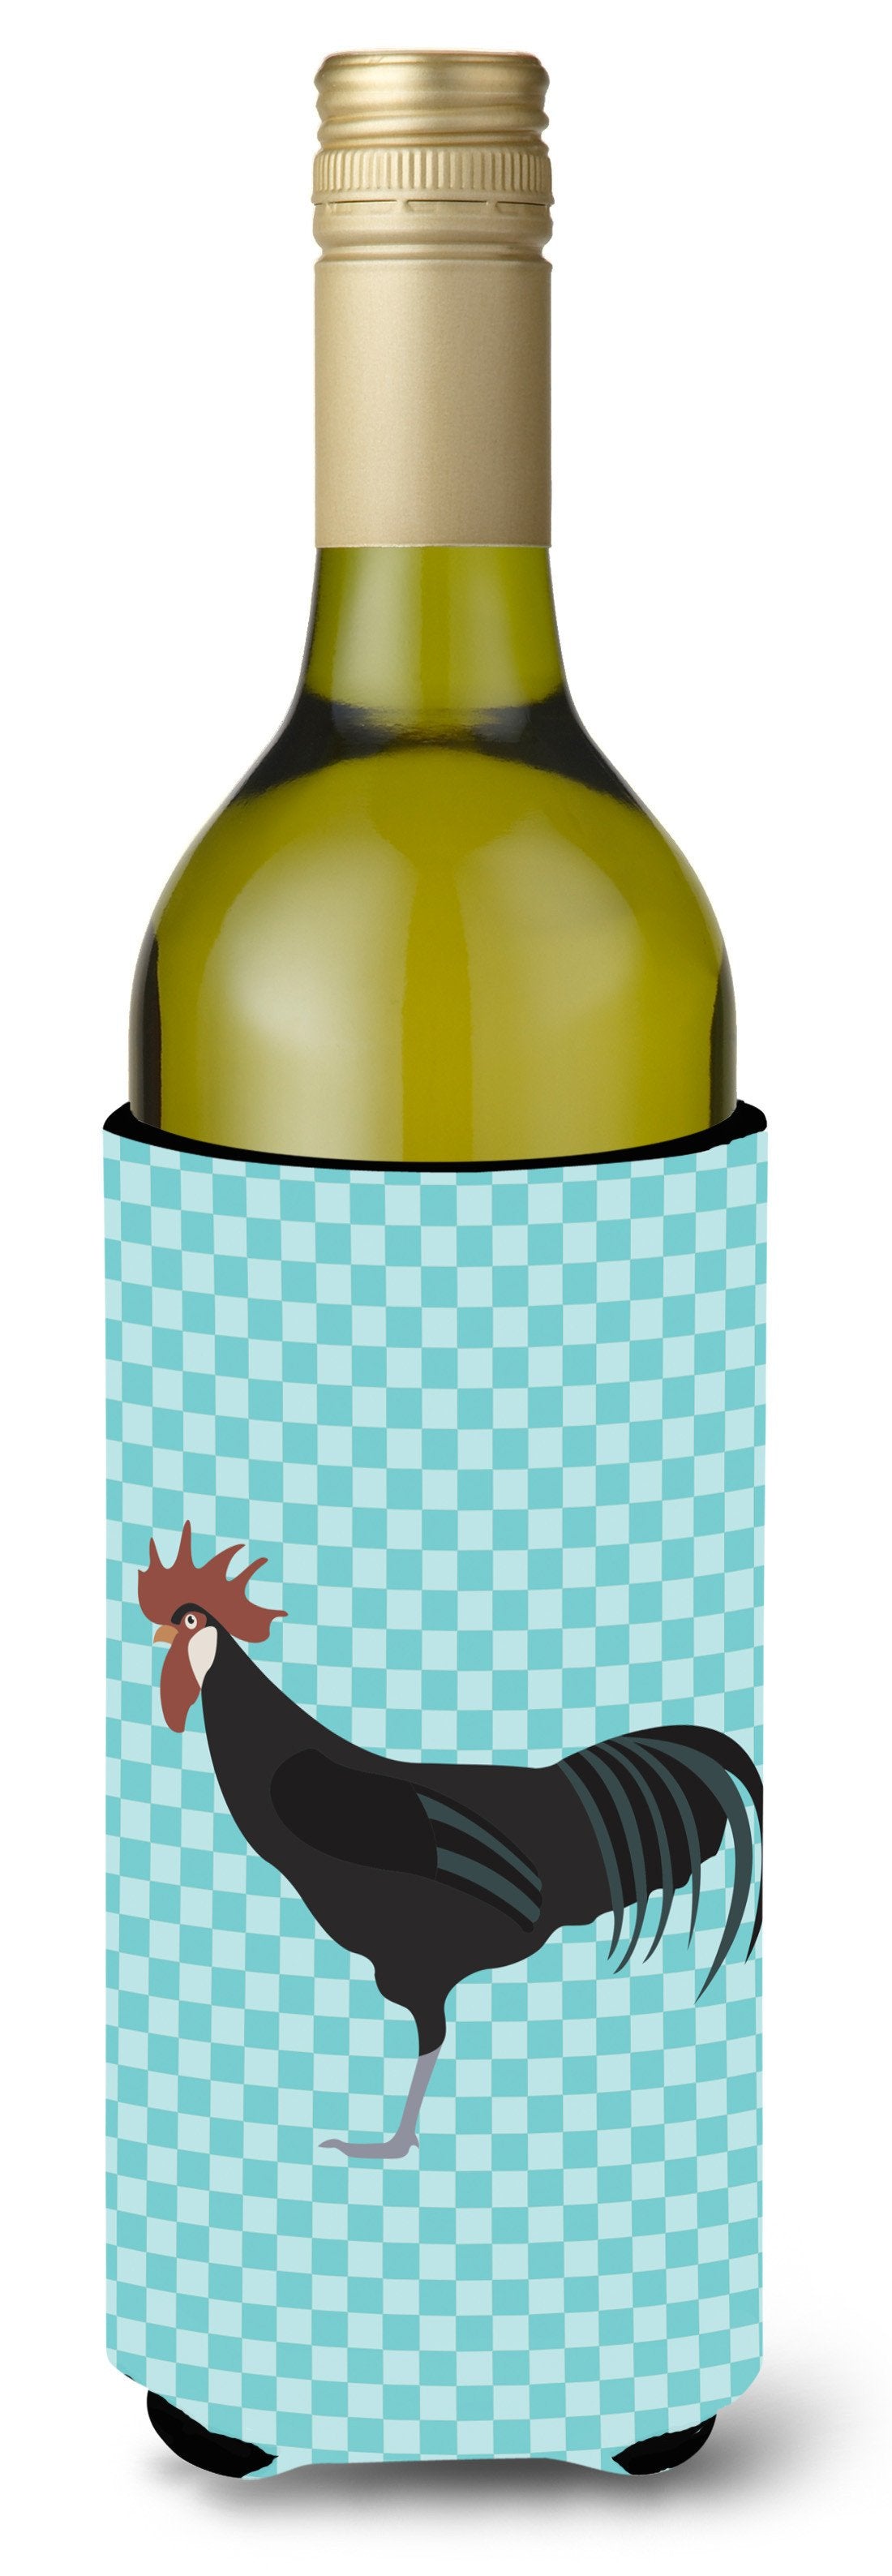 Minorca Ctalalan Chicken Blue Check Wine Bottle Beverge Insulator Hugger BB8015LITERK by Caroline's Treasures